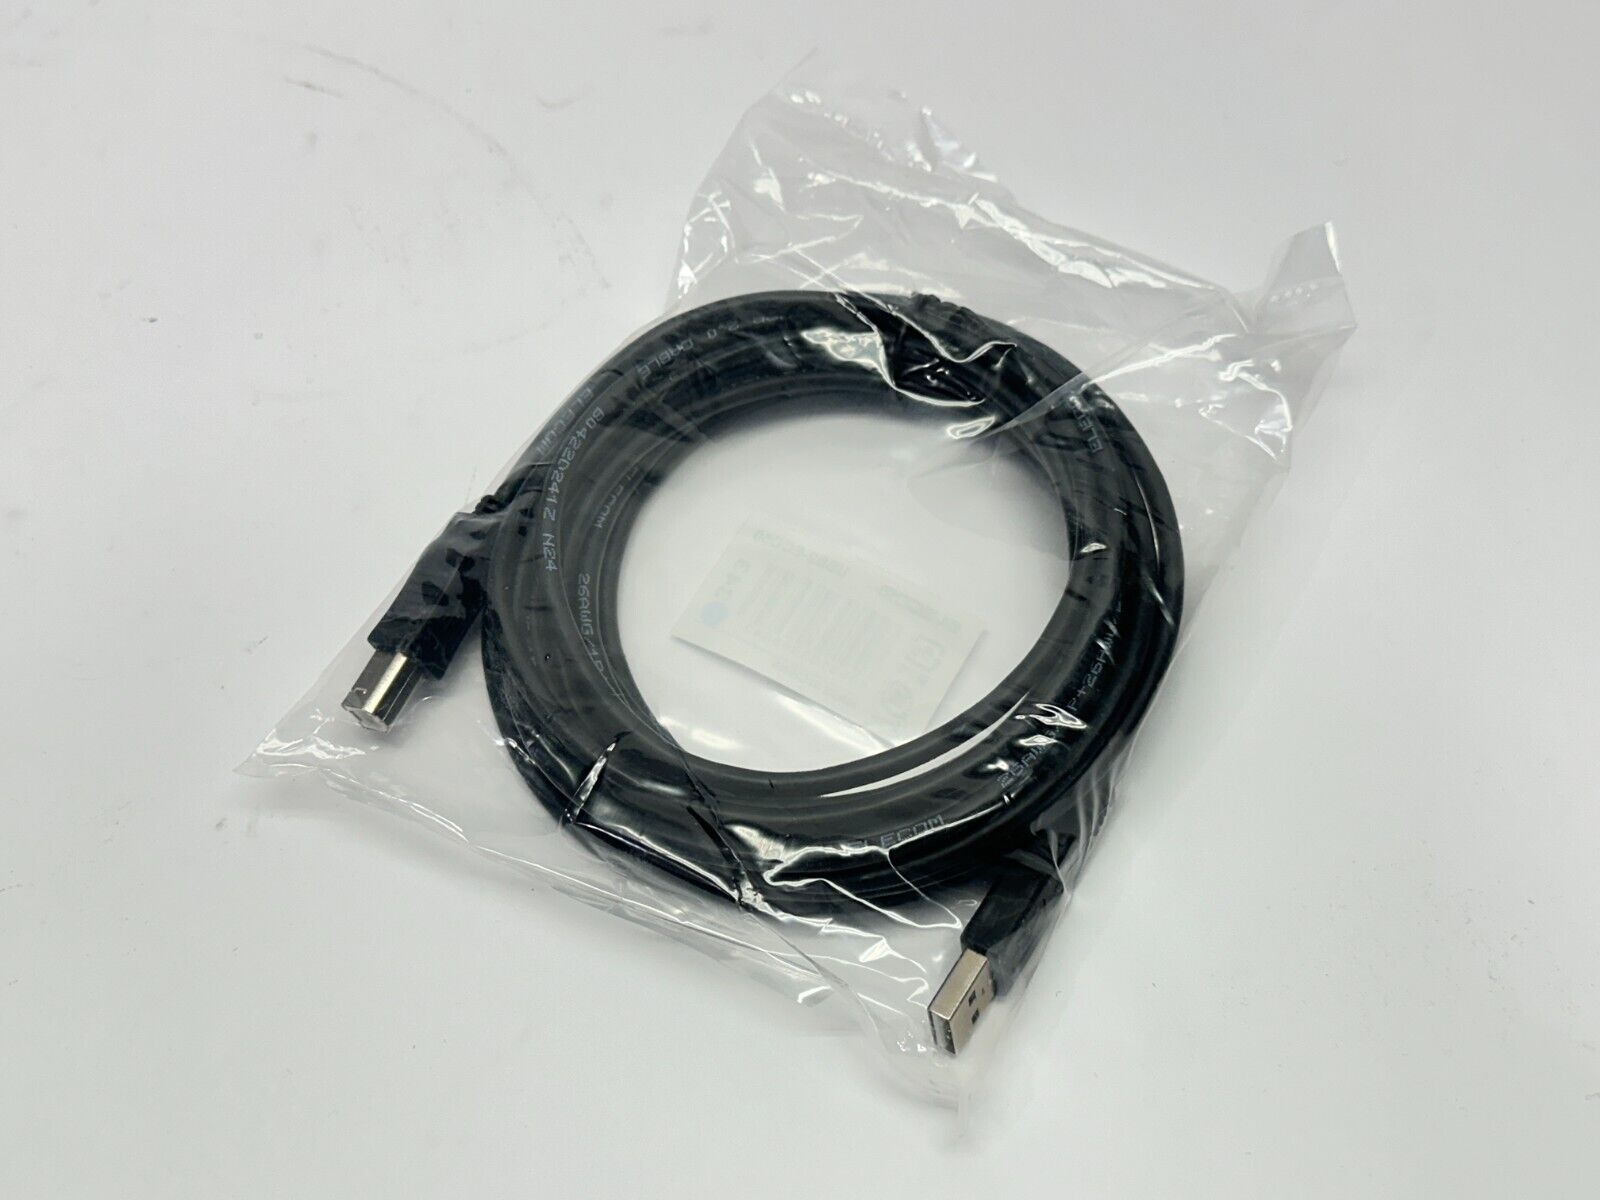 Elecom USB2-ECO50 USB Cable USB 2.0 A - B Male 5m